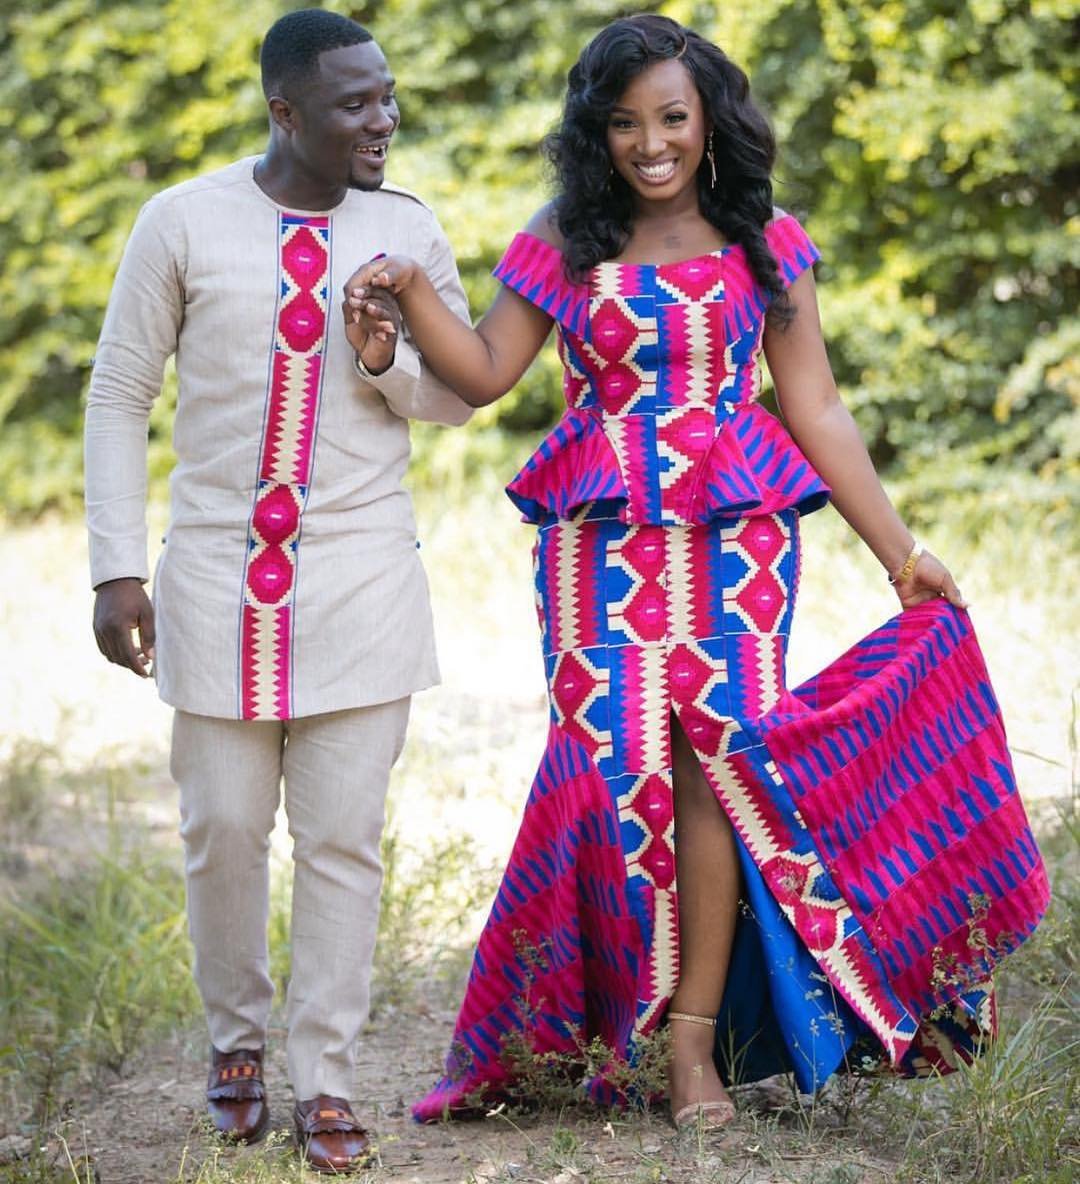 Elegant & glamorous African wedding dresses in Kente – Afroculture.net